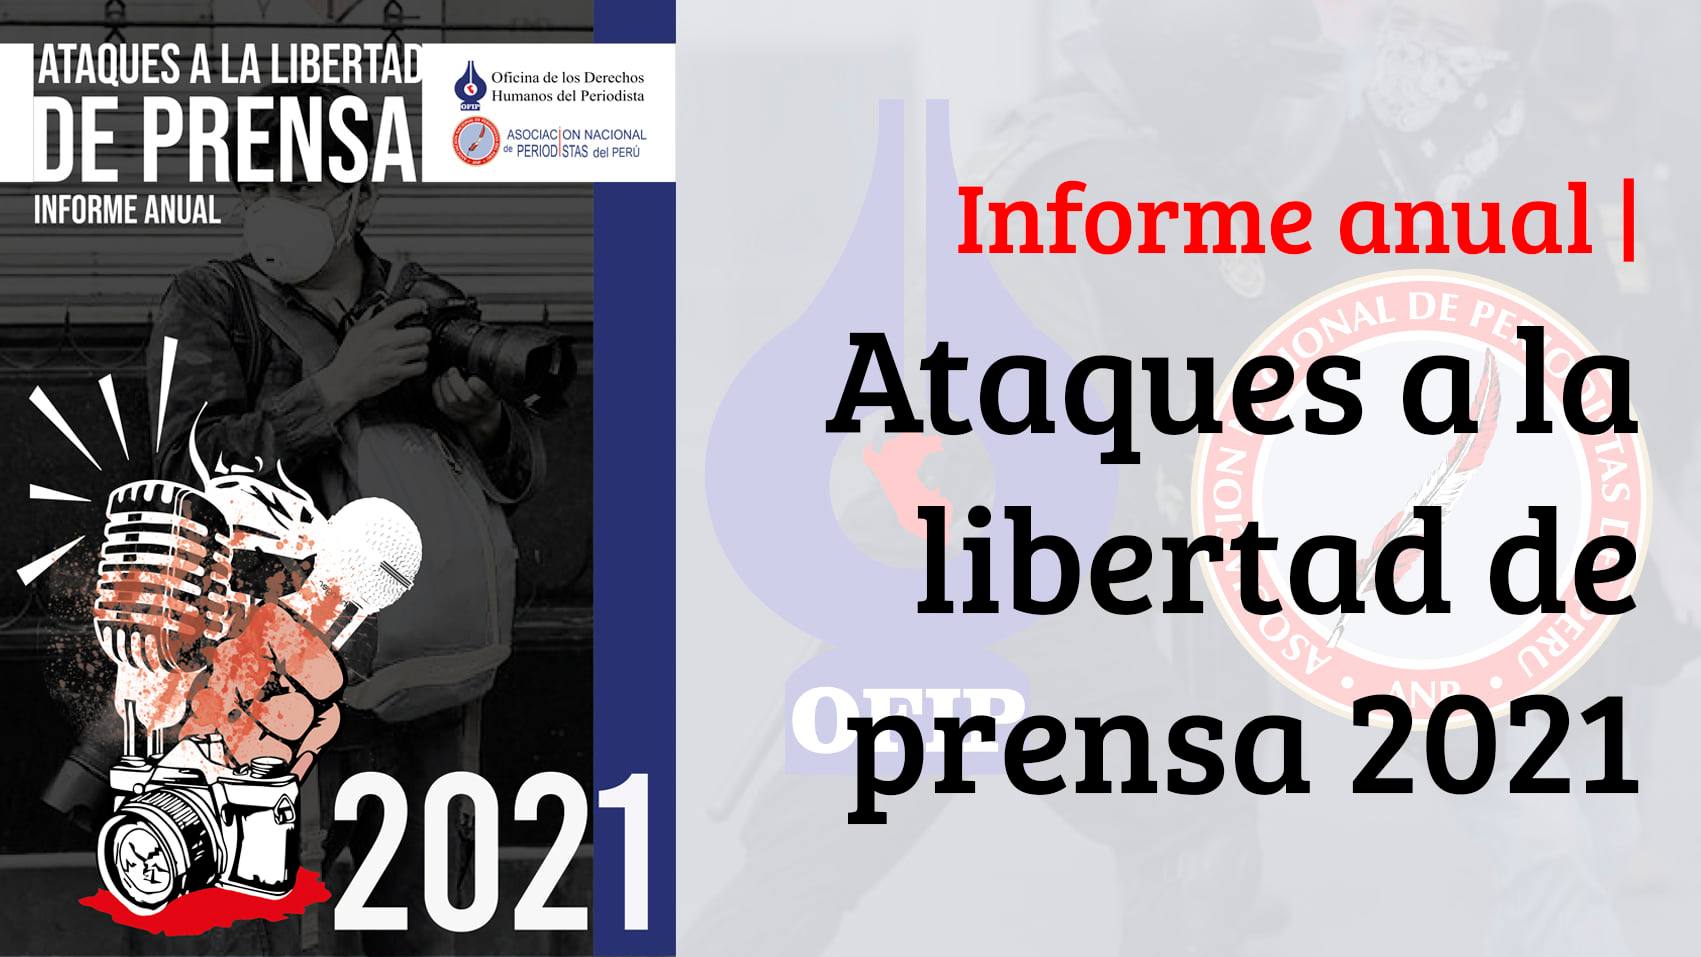 La Asociación Nacional de Periodistas del Perú registró 206 ataques a la libertad de prensa en el 2021